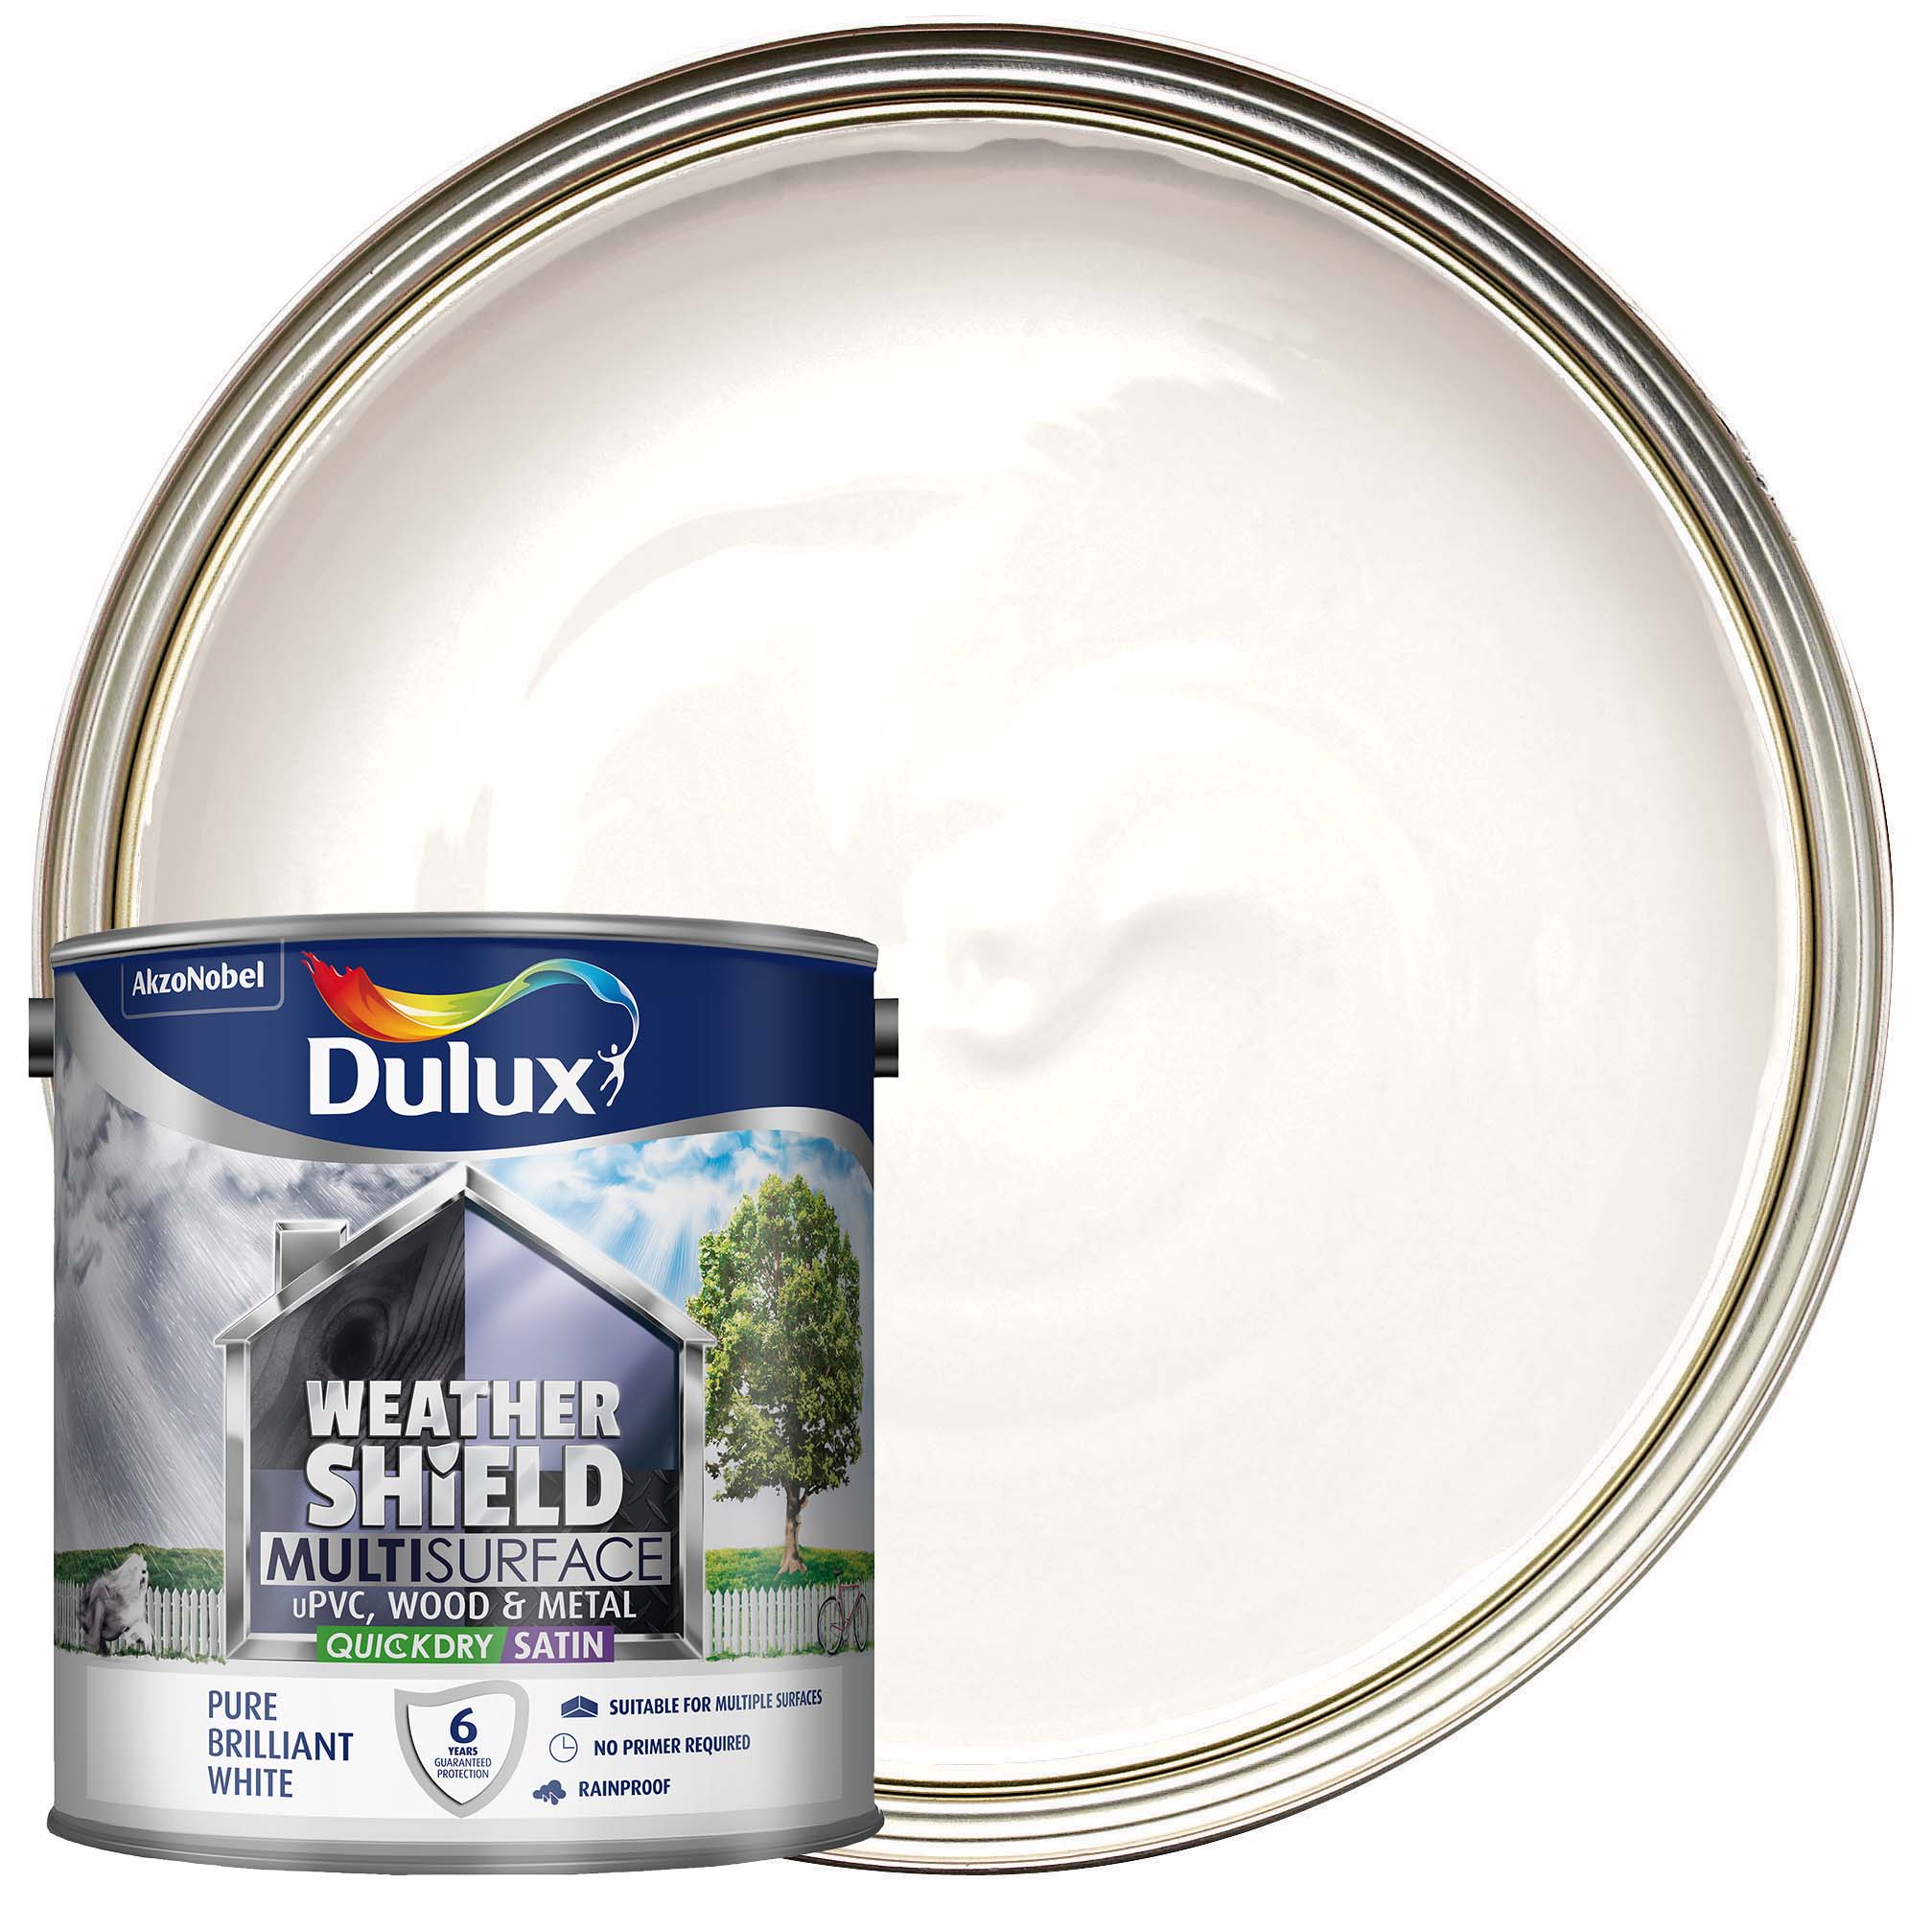 Image of Dulux Weathershield Multi-Surface Paint - Pure Brilliant White - 2.5L